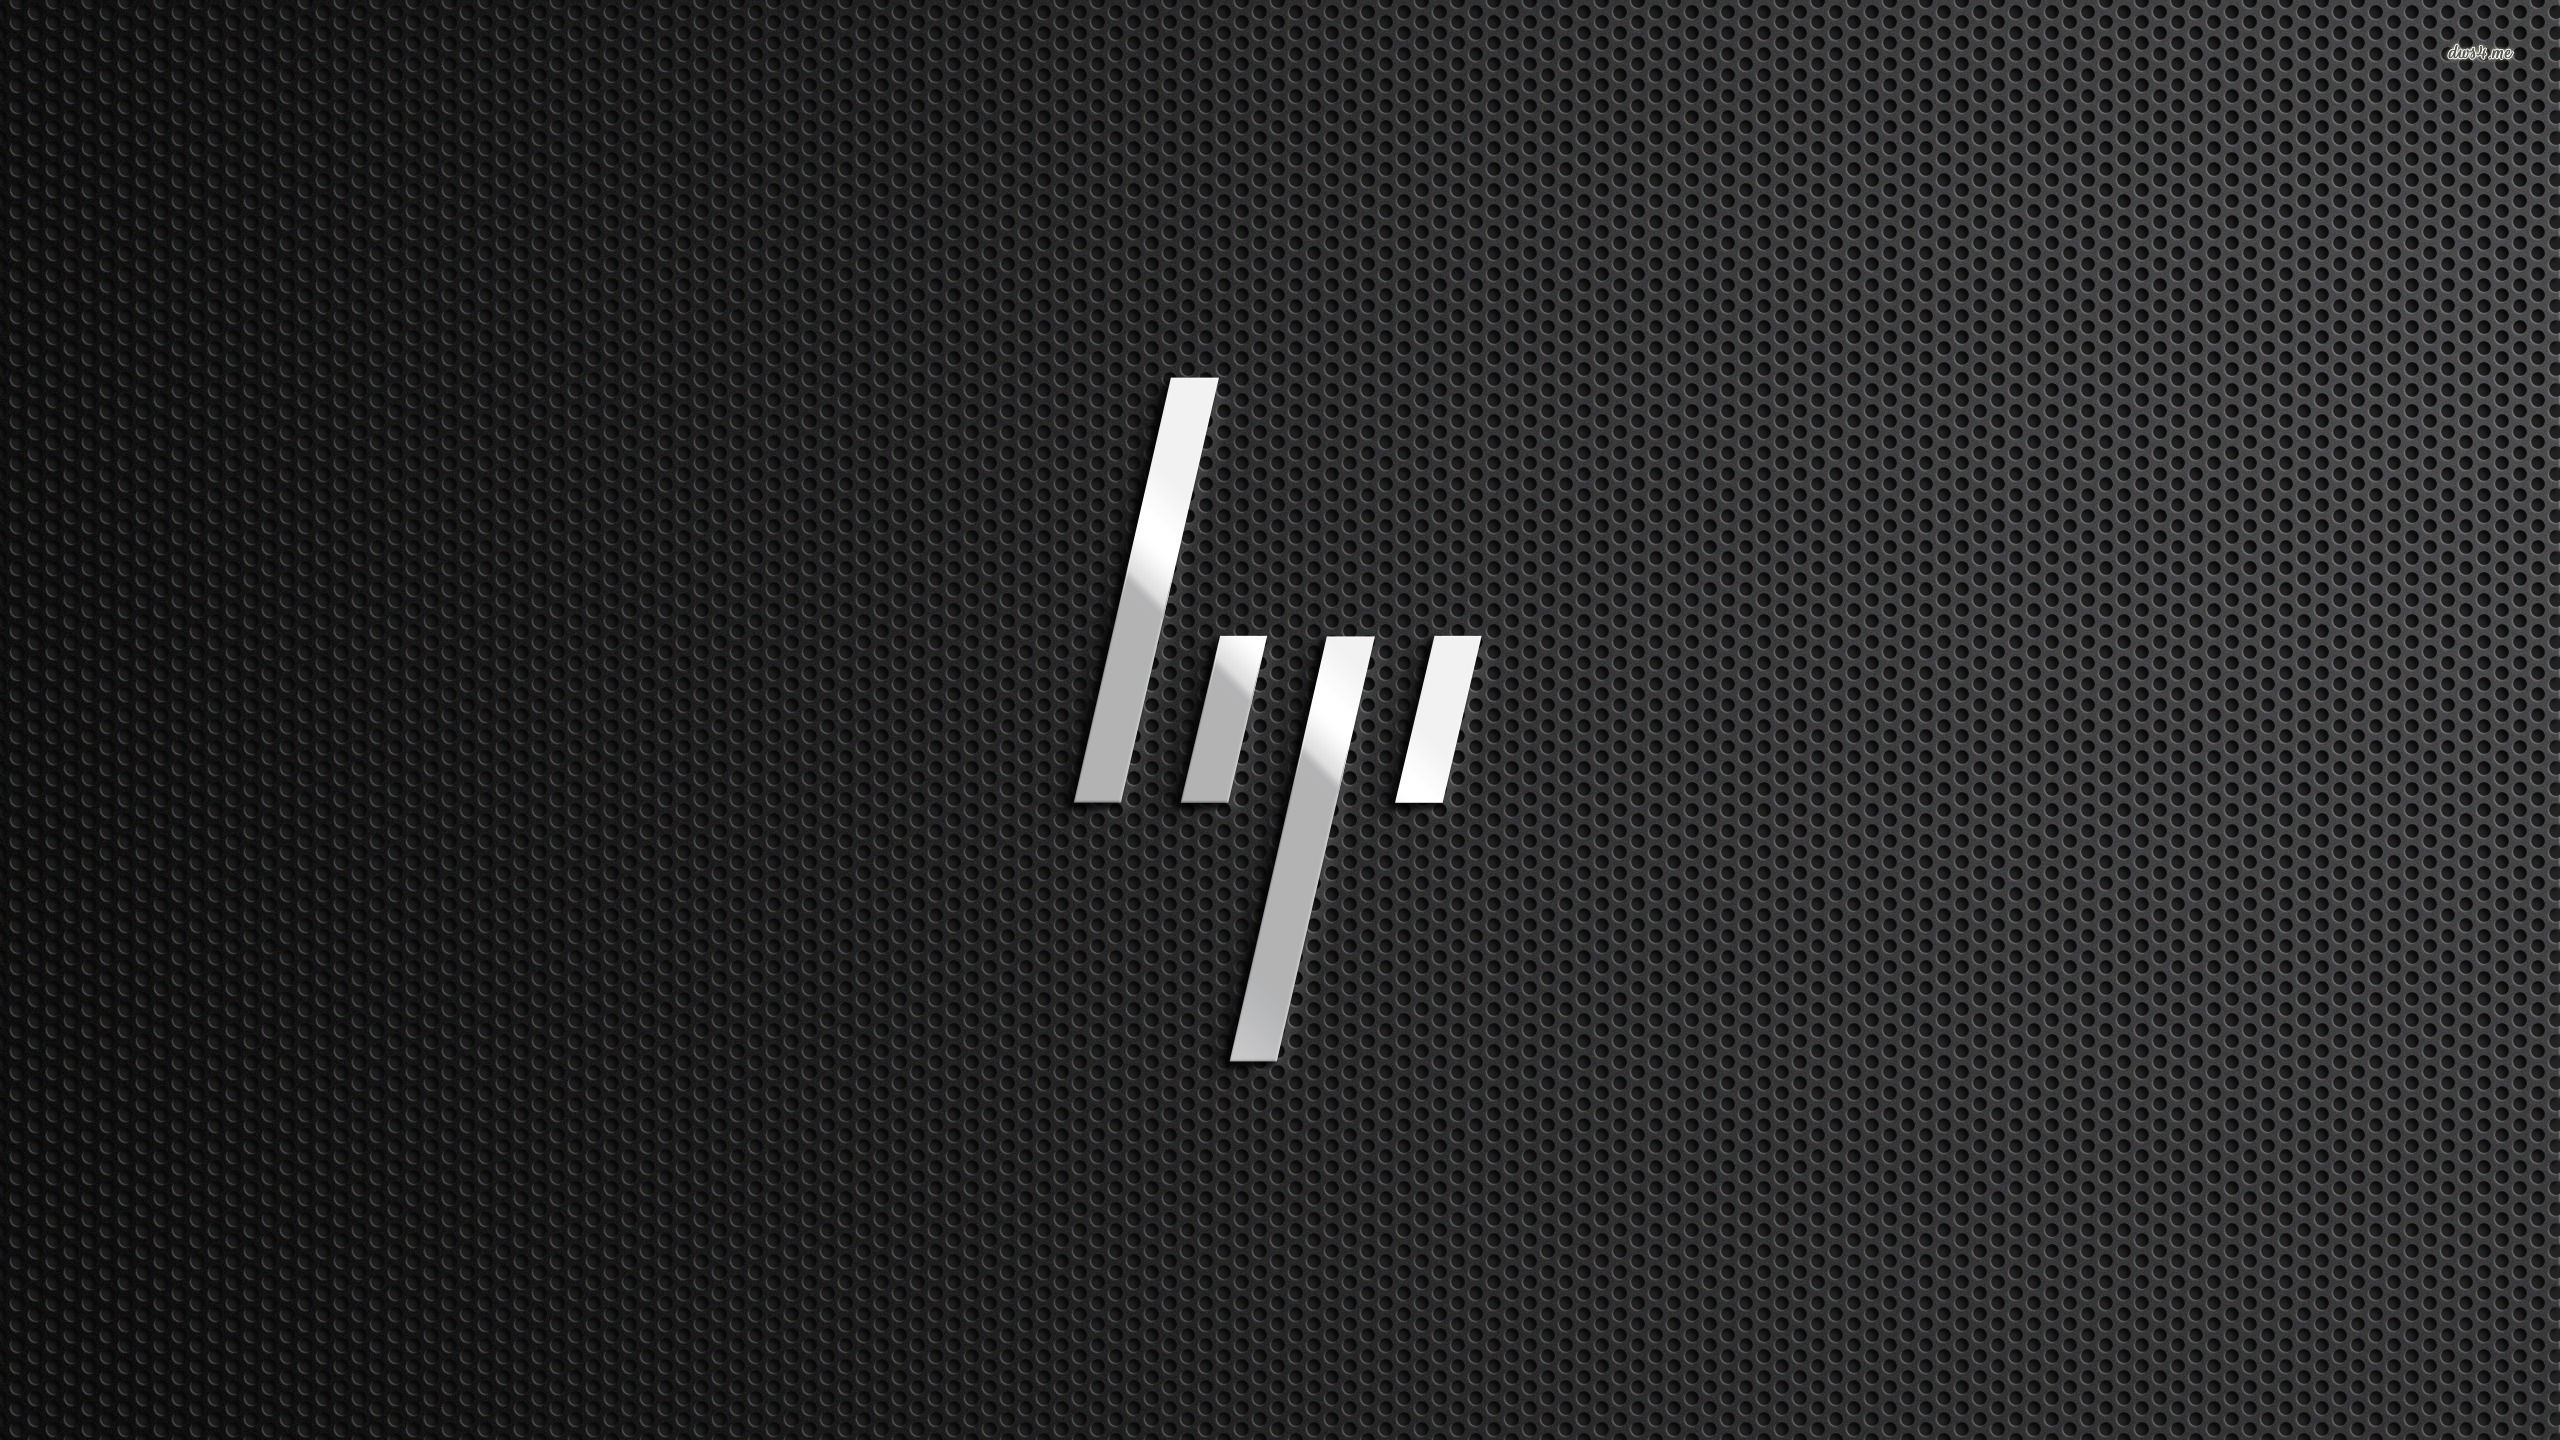 Metallic HP logo on black dots wallpaper - Computer wallpapers